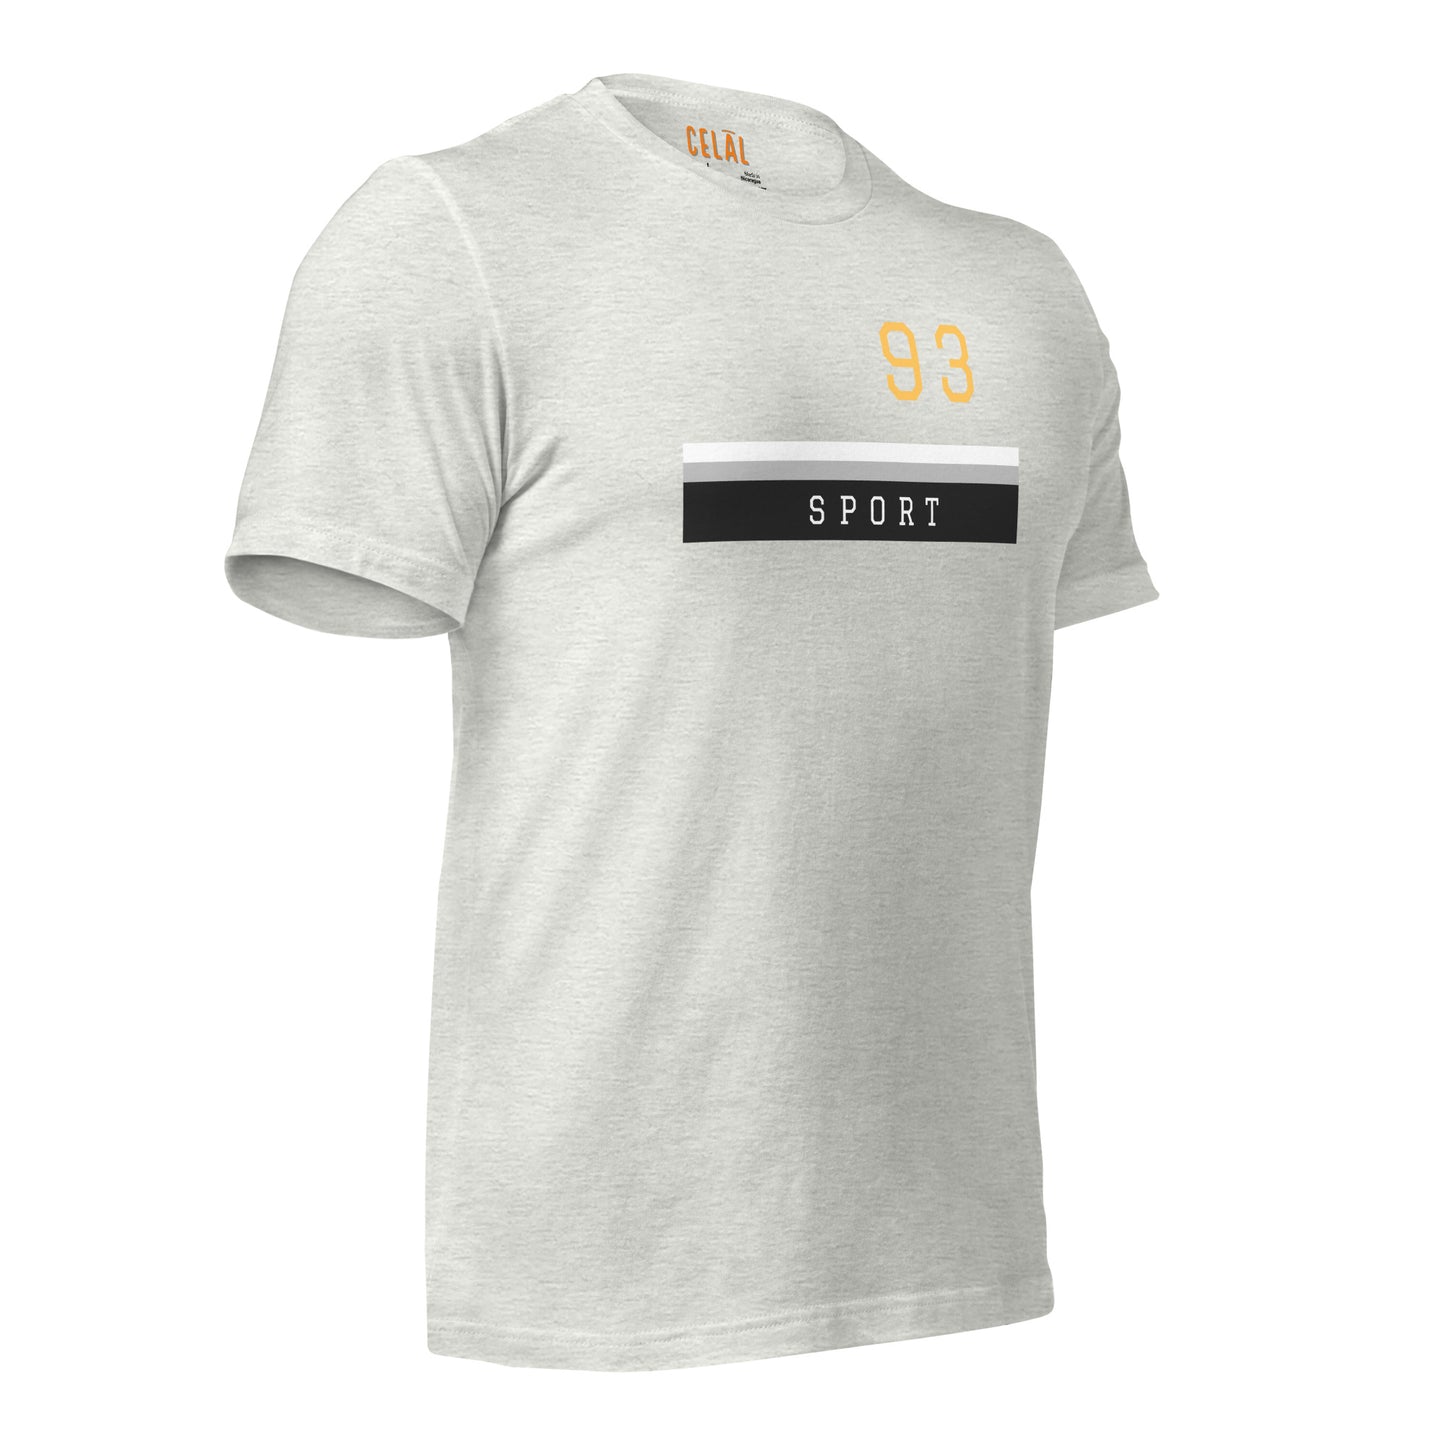 93 Unisex t-shirt